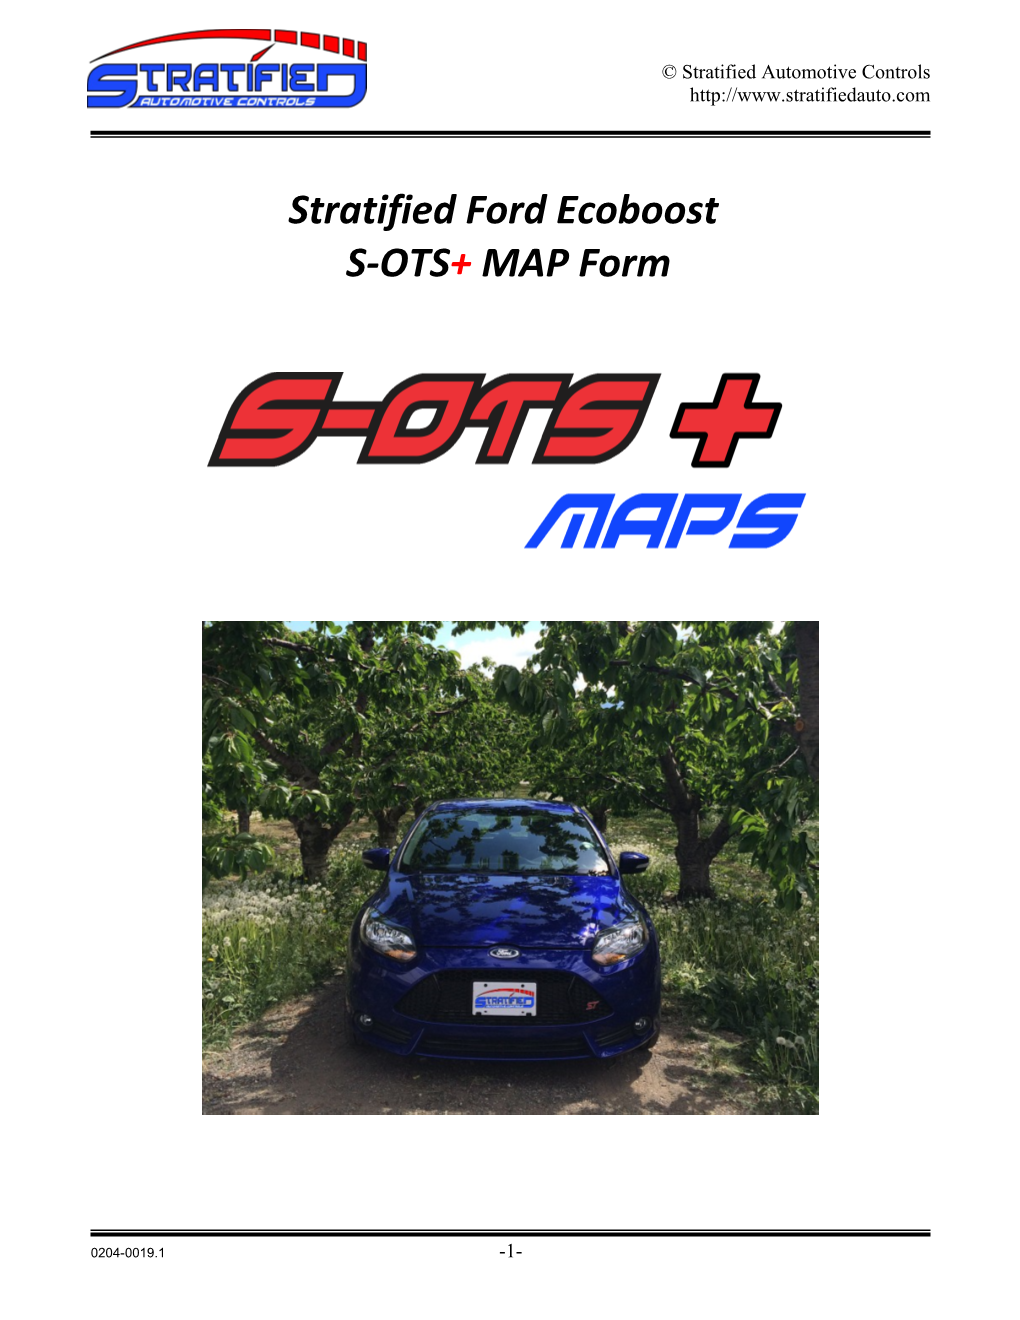 Stratified Automotive Controls